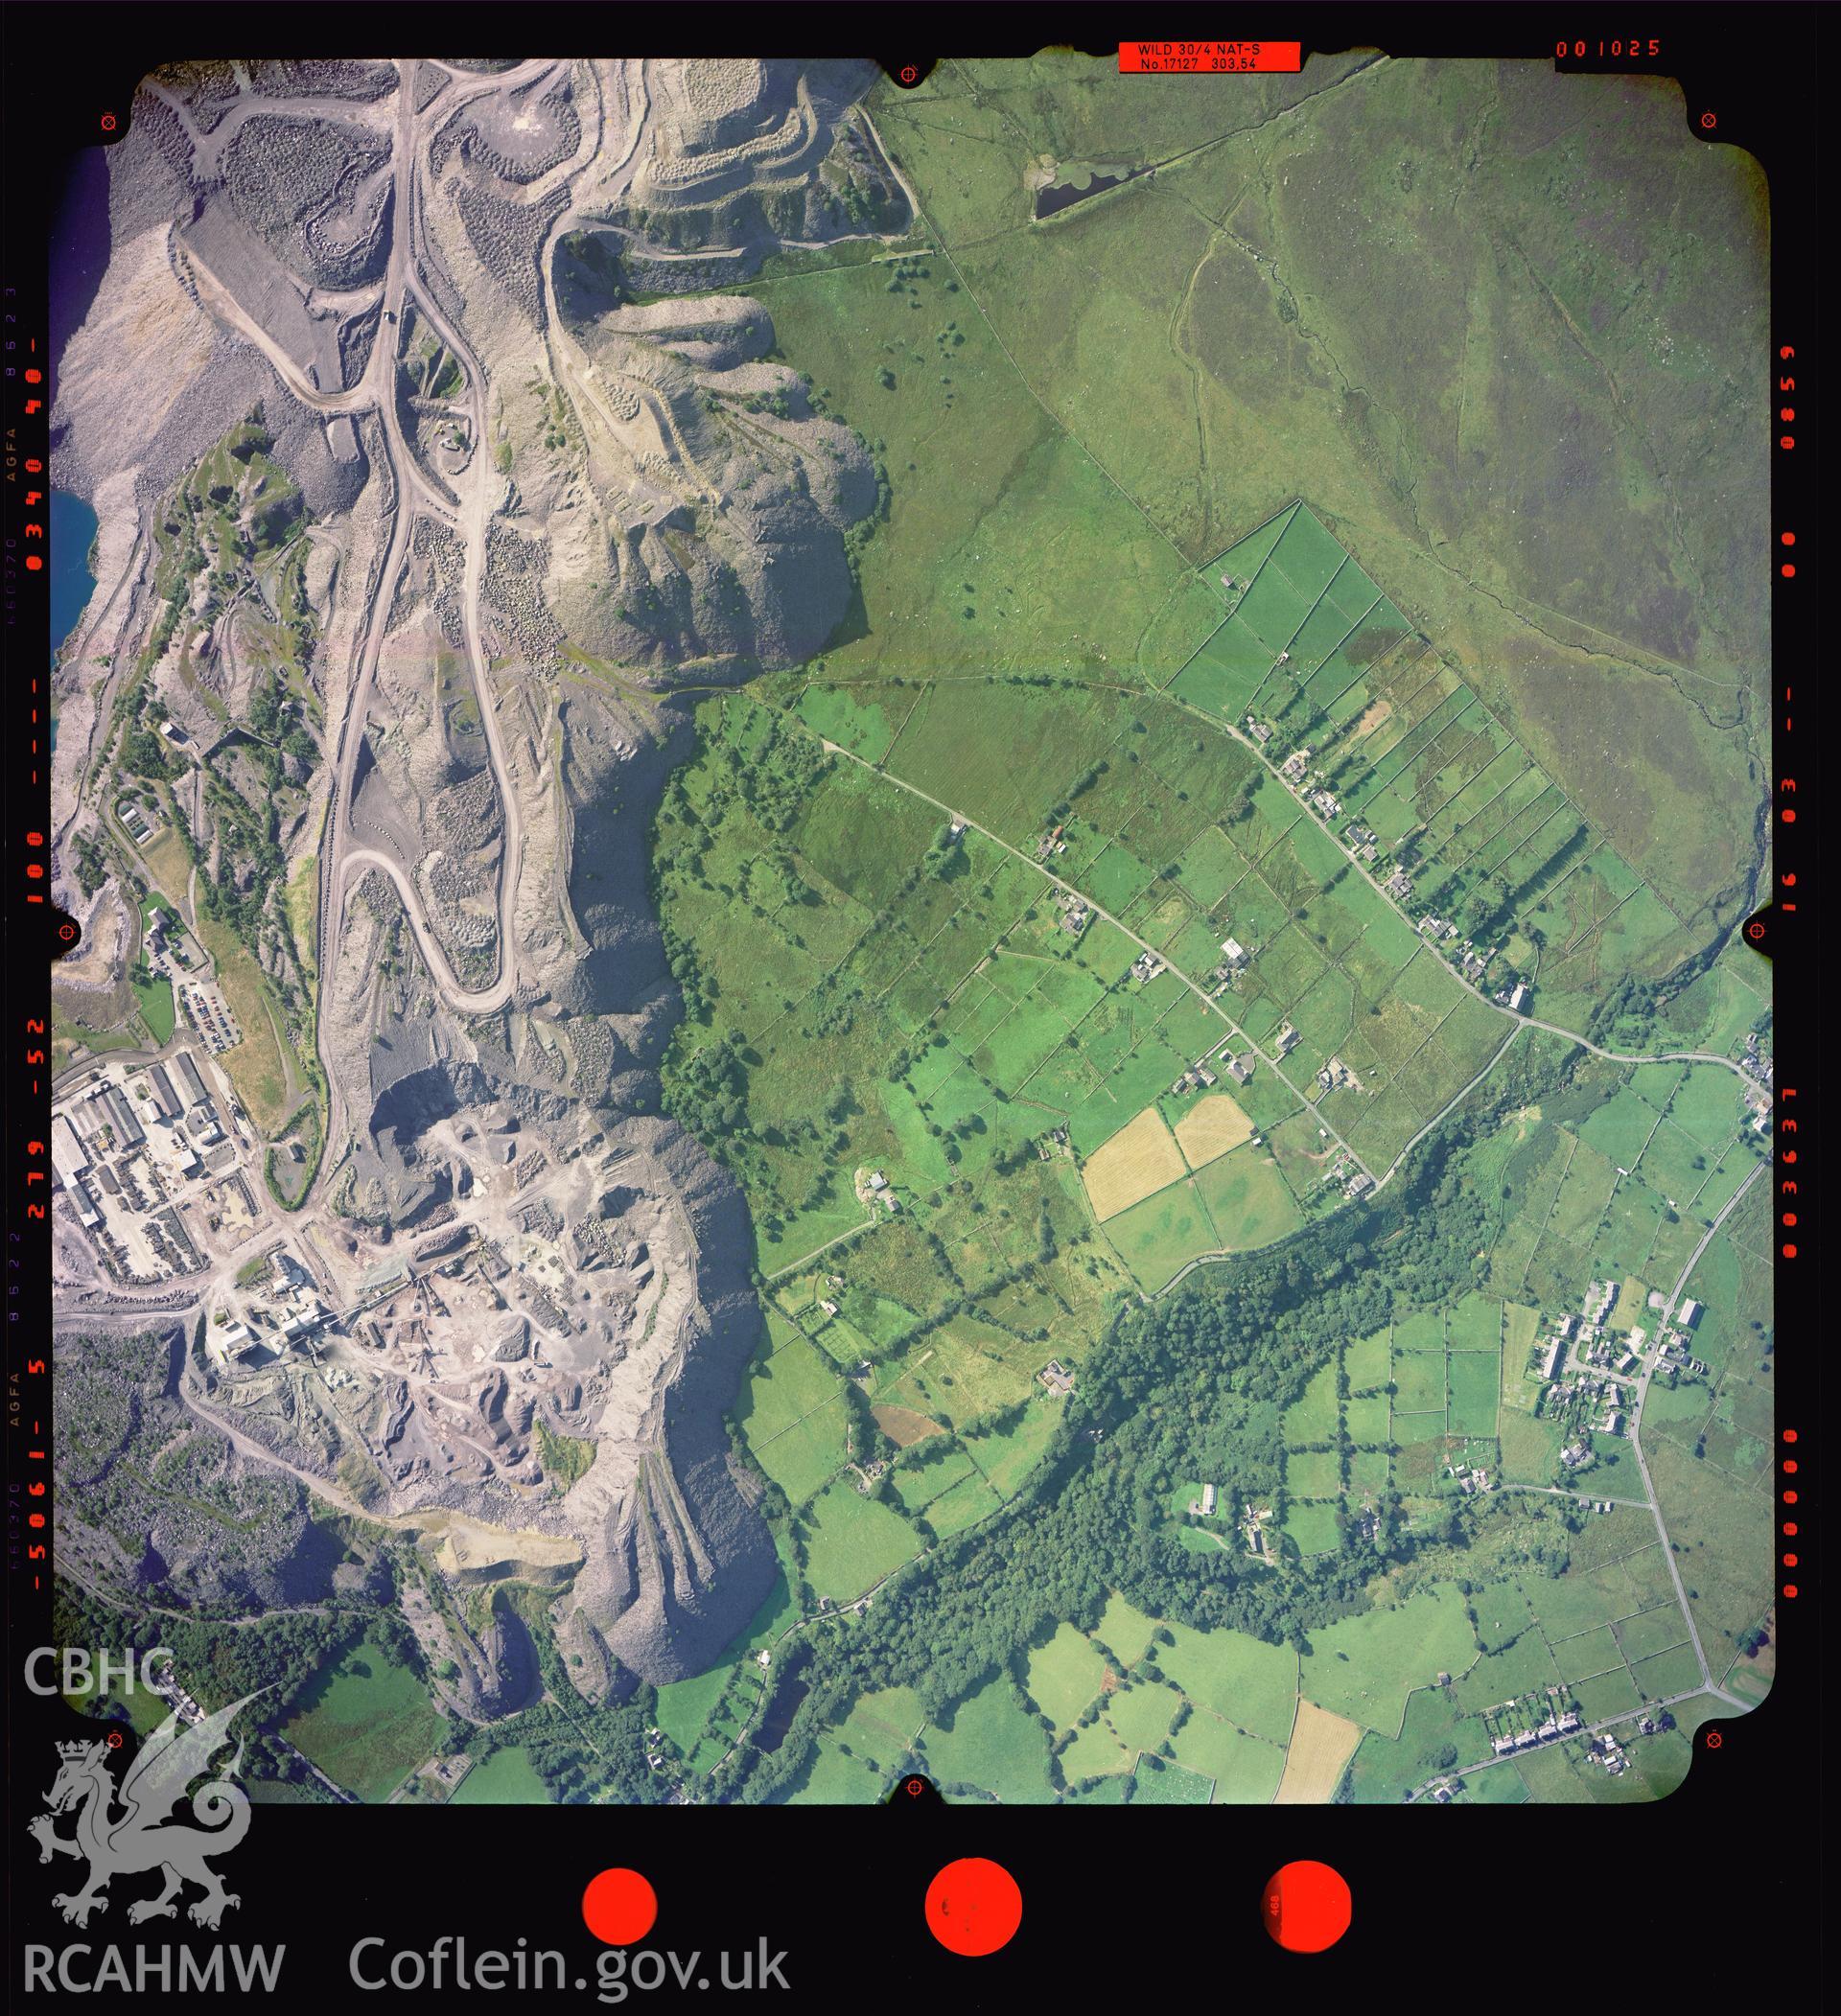 Digitized copy of a colour aerial photograph showing Mynydd Llandegai, taken by Ordnance Survey, 2002.